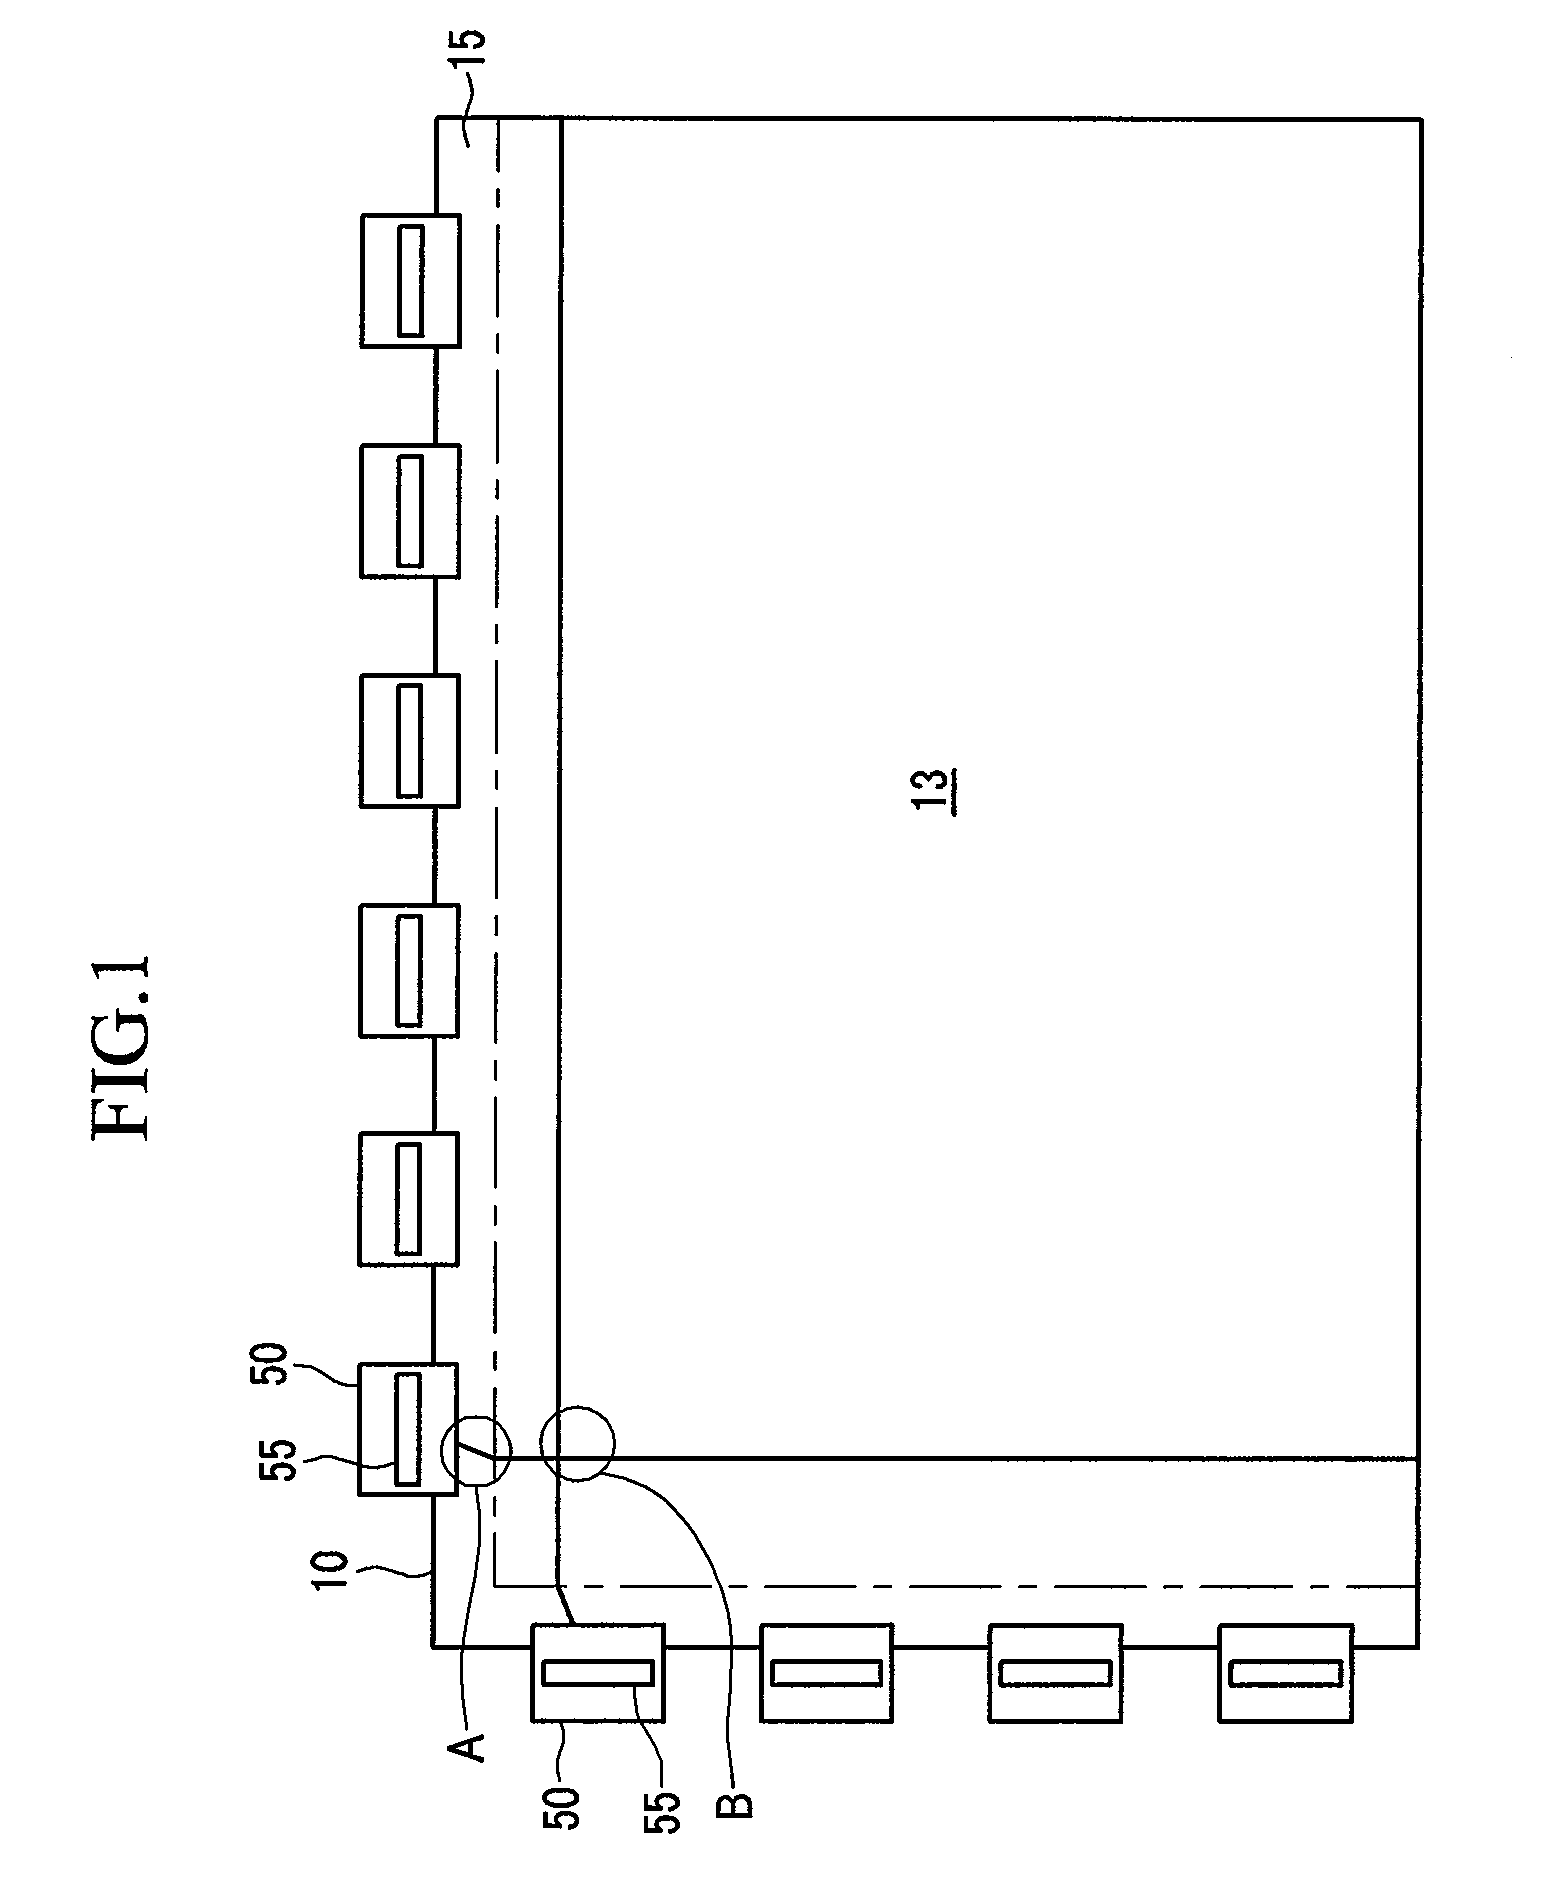 Thin Film Transistor Array Panel